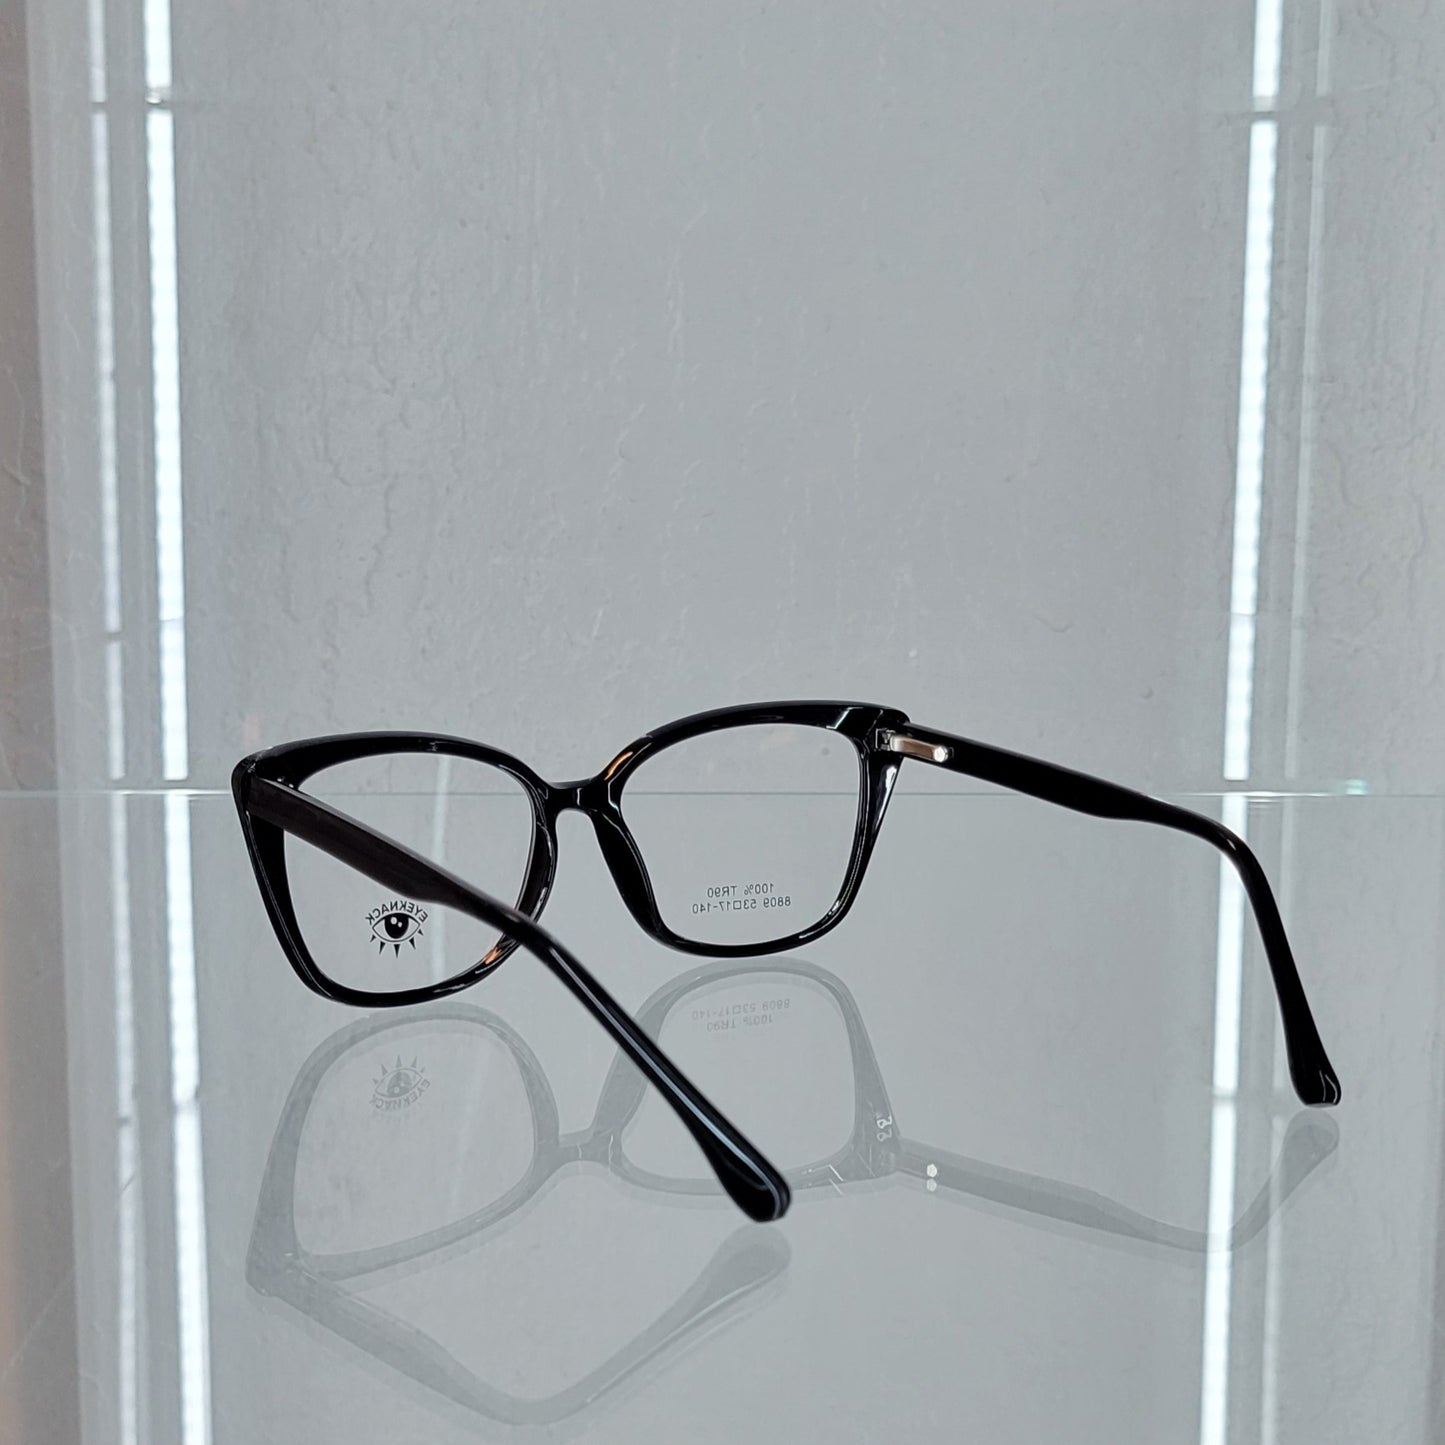 Atelier eyewear frames